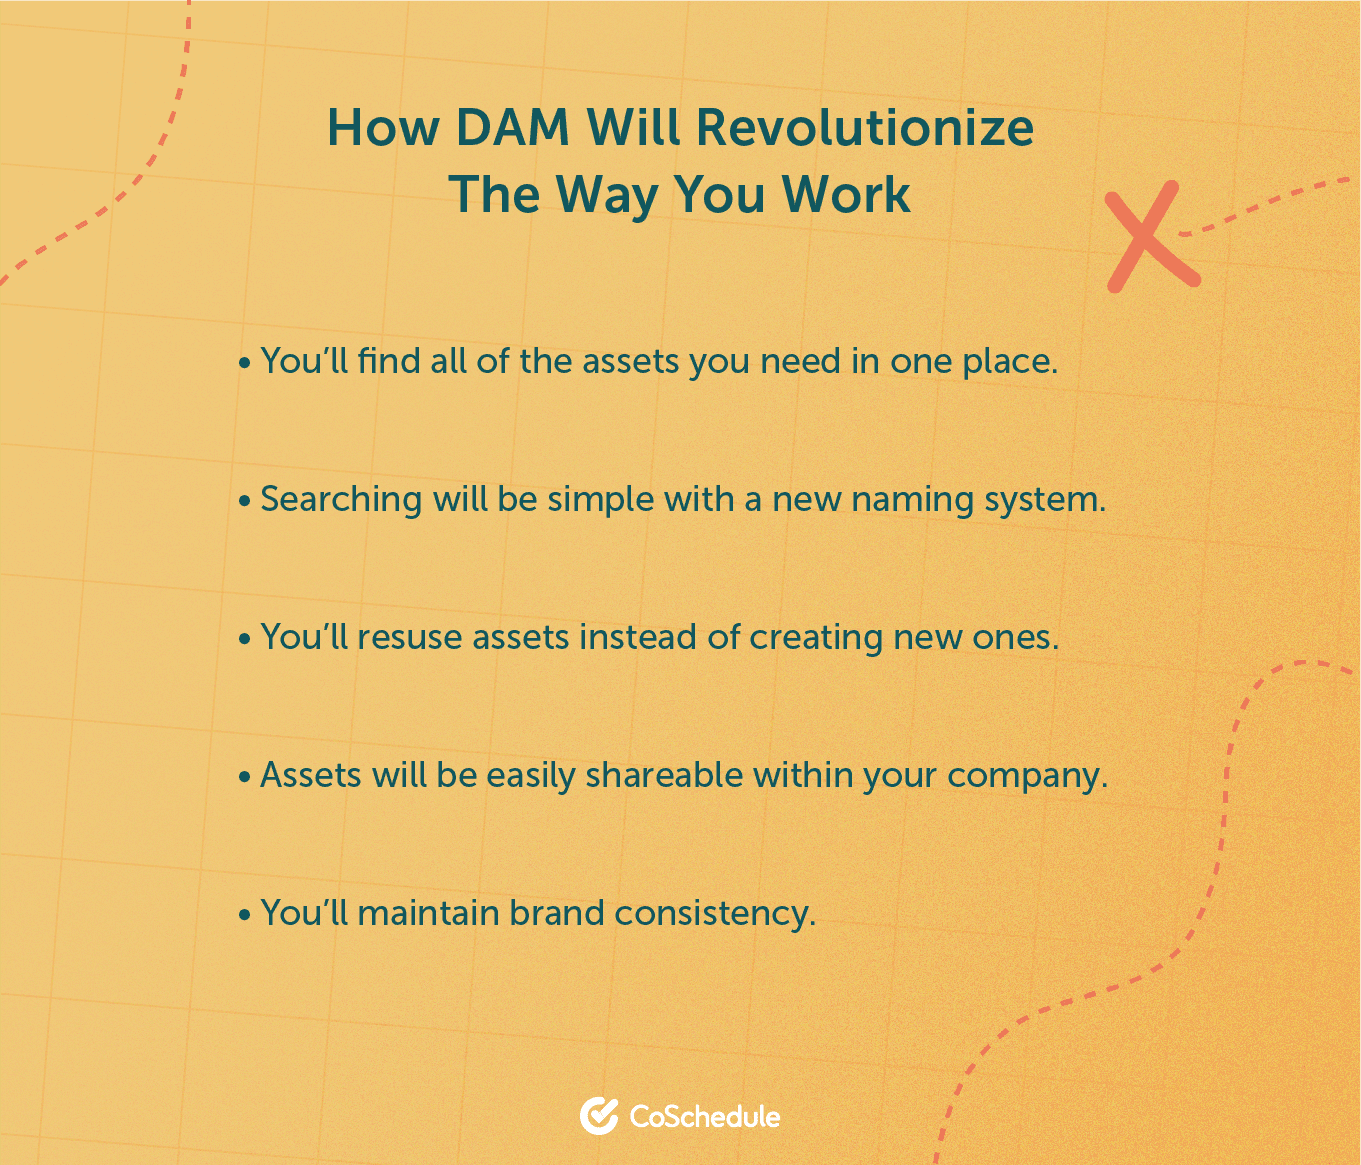 How DAM will revolutionize the way you work